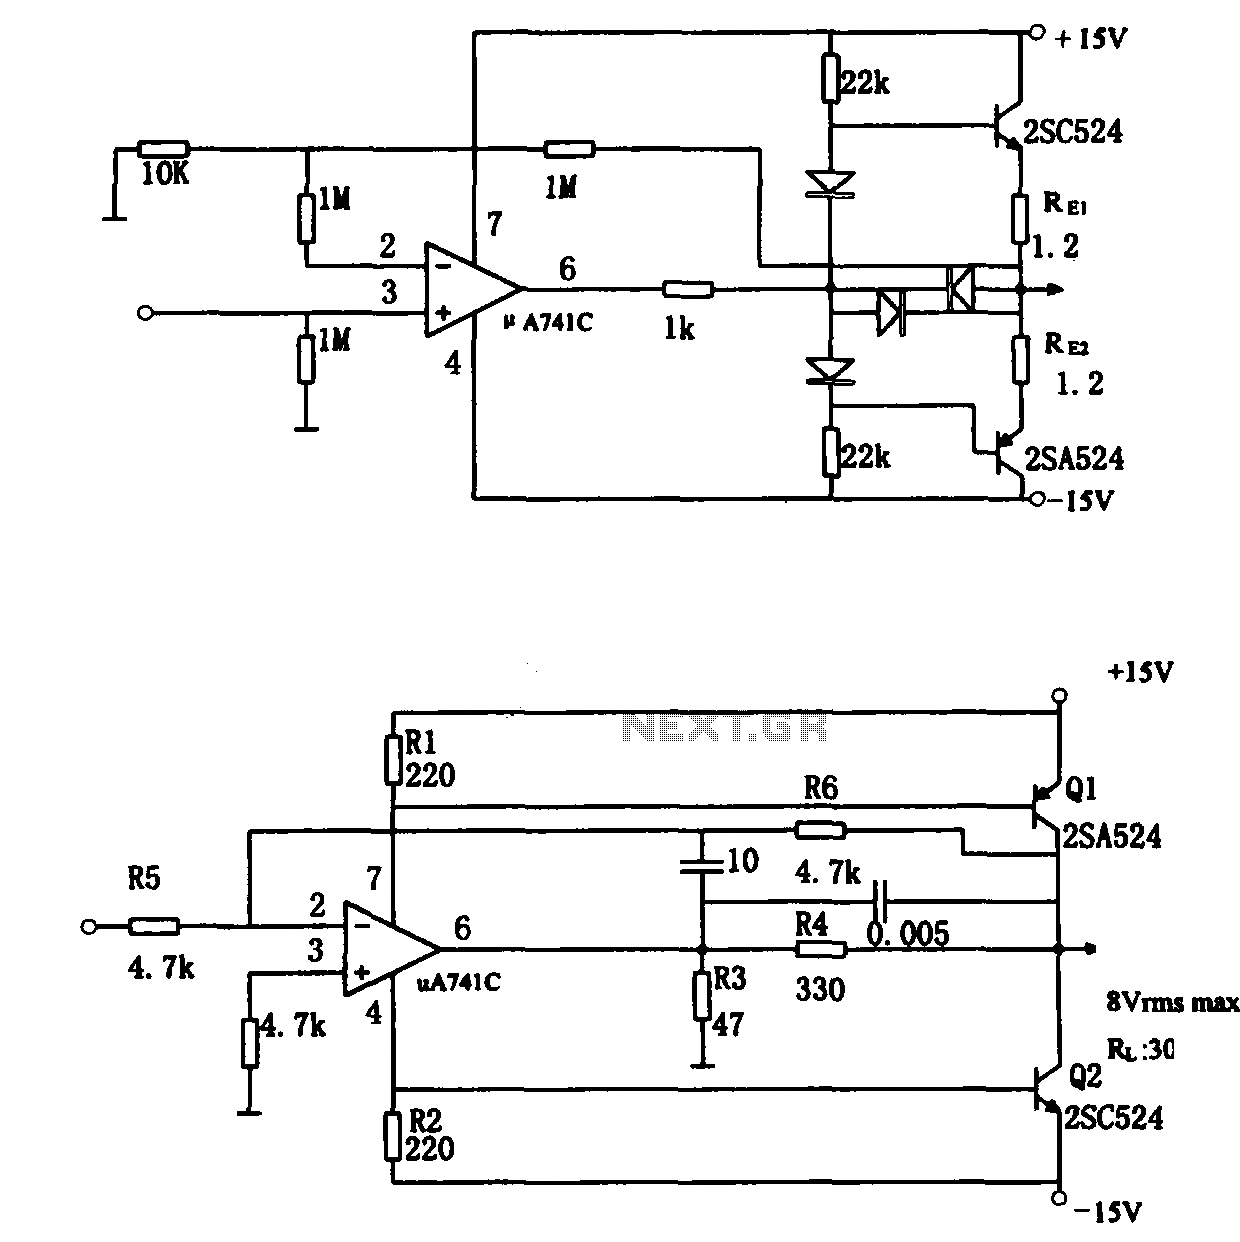 Direct coupling audio power amplifier configuration A741 circuit